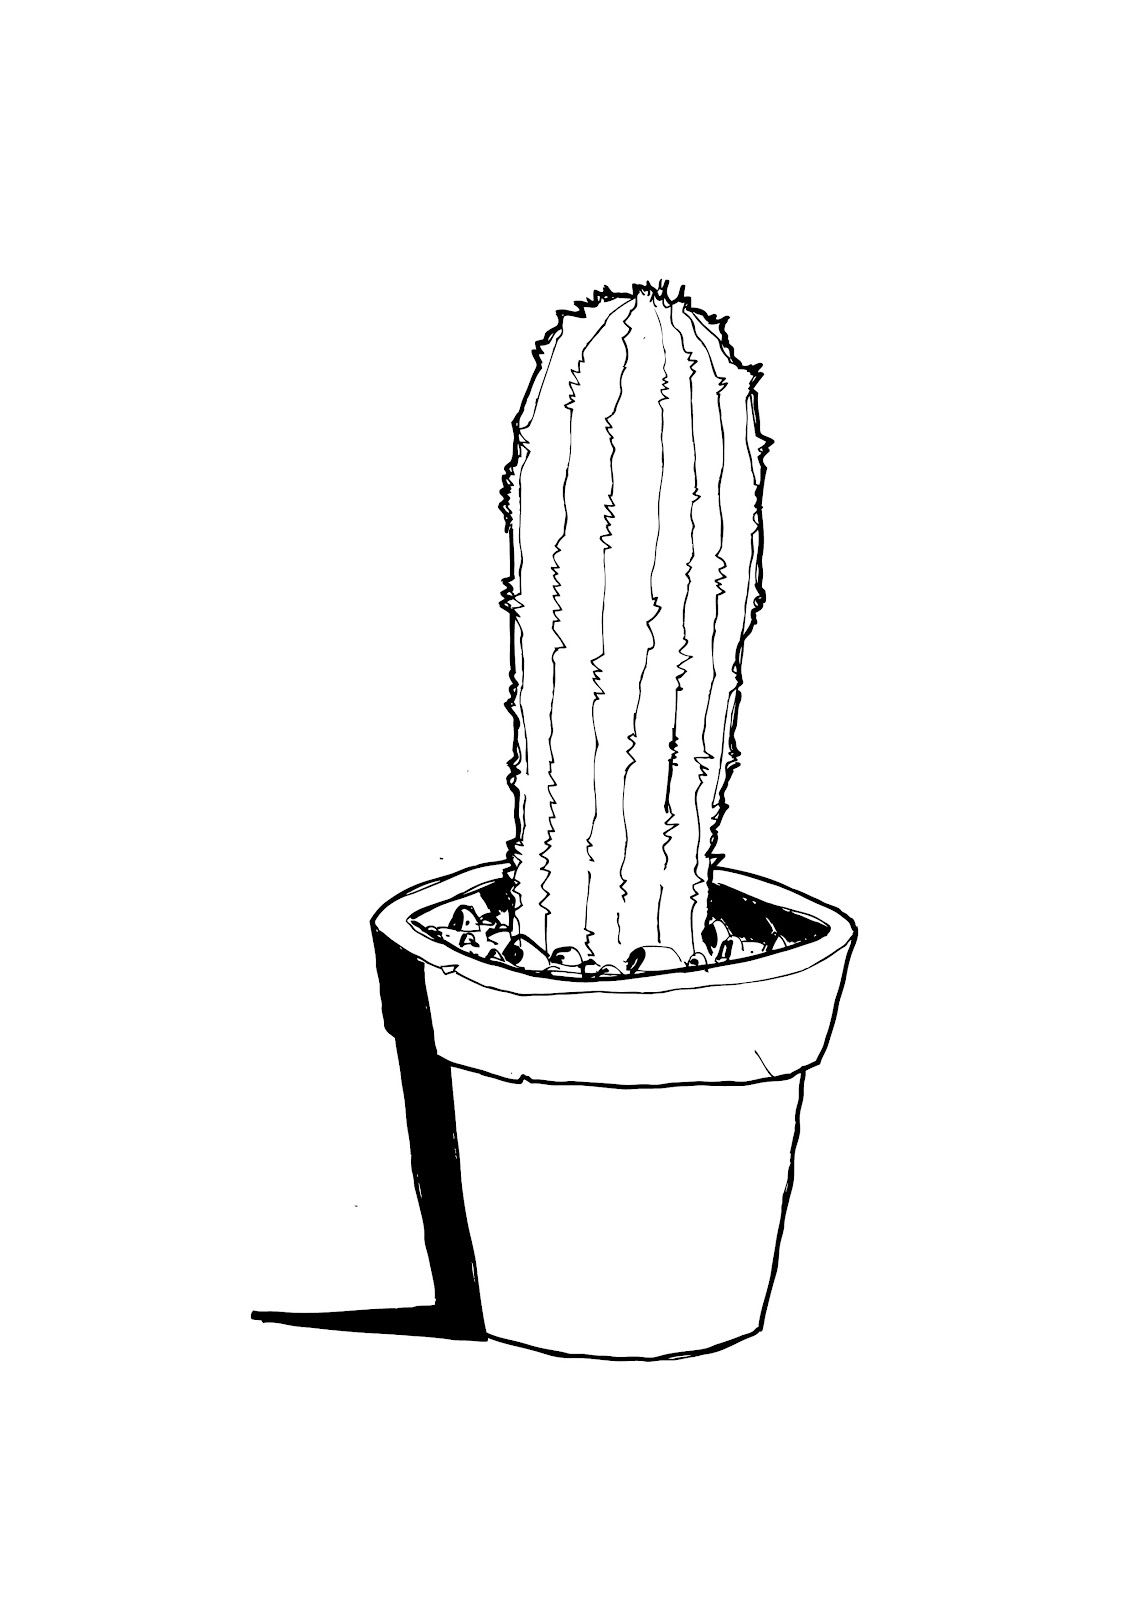 Drawn Cactus minimalist